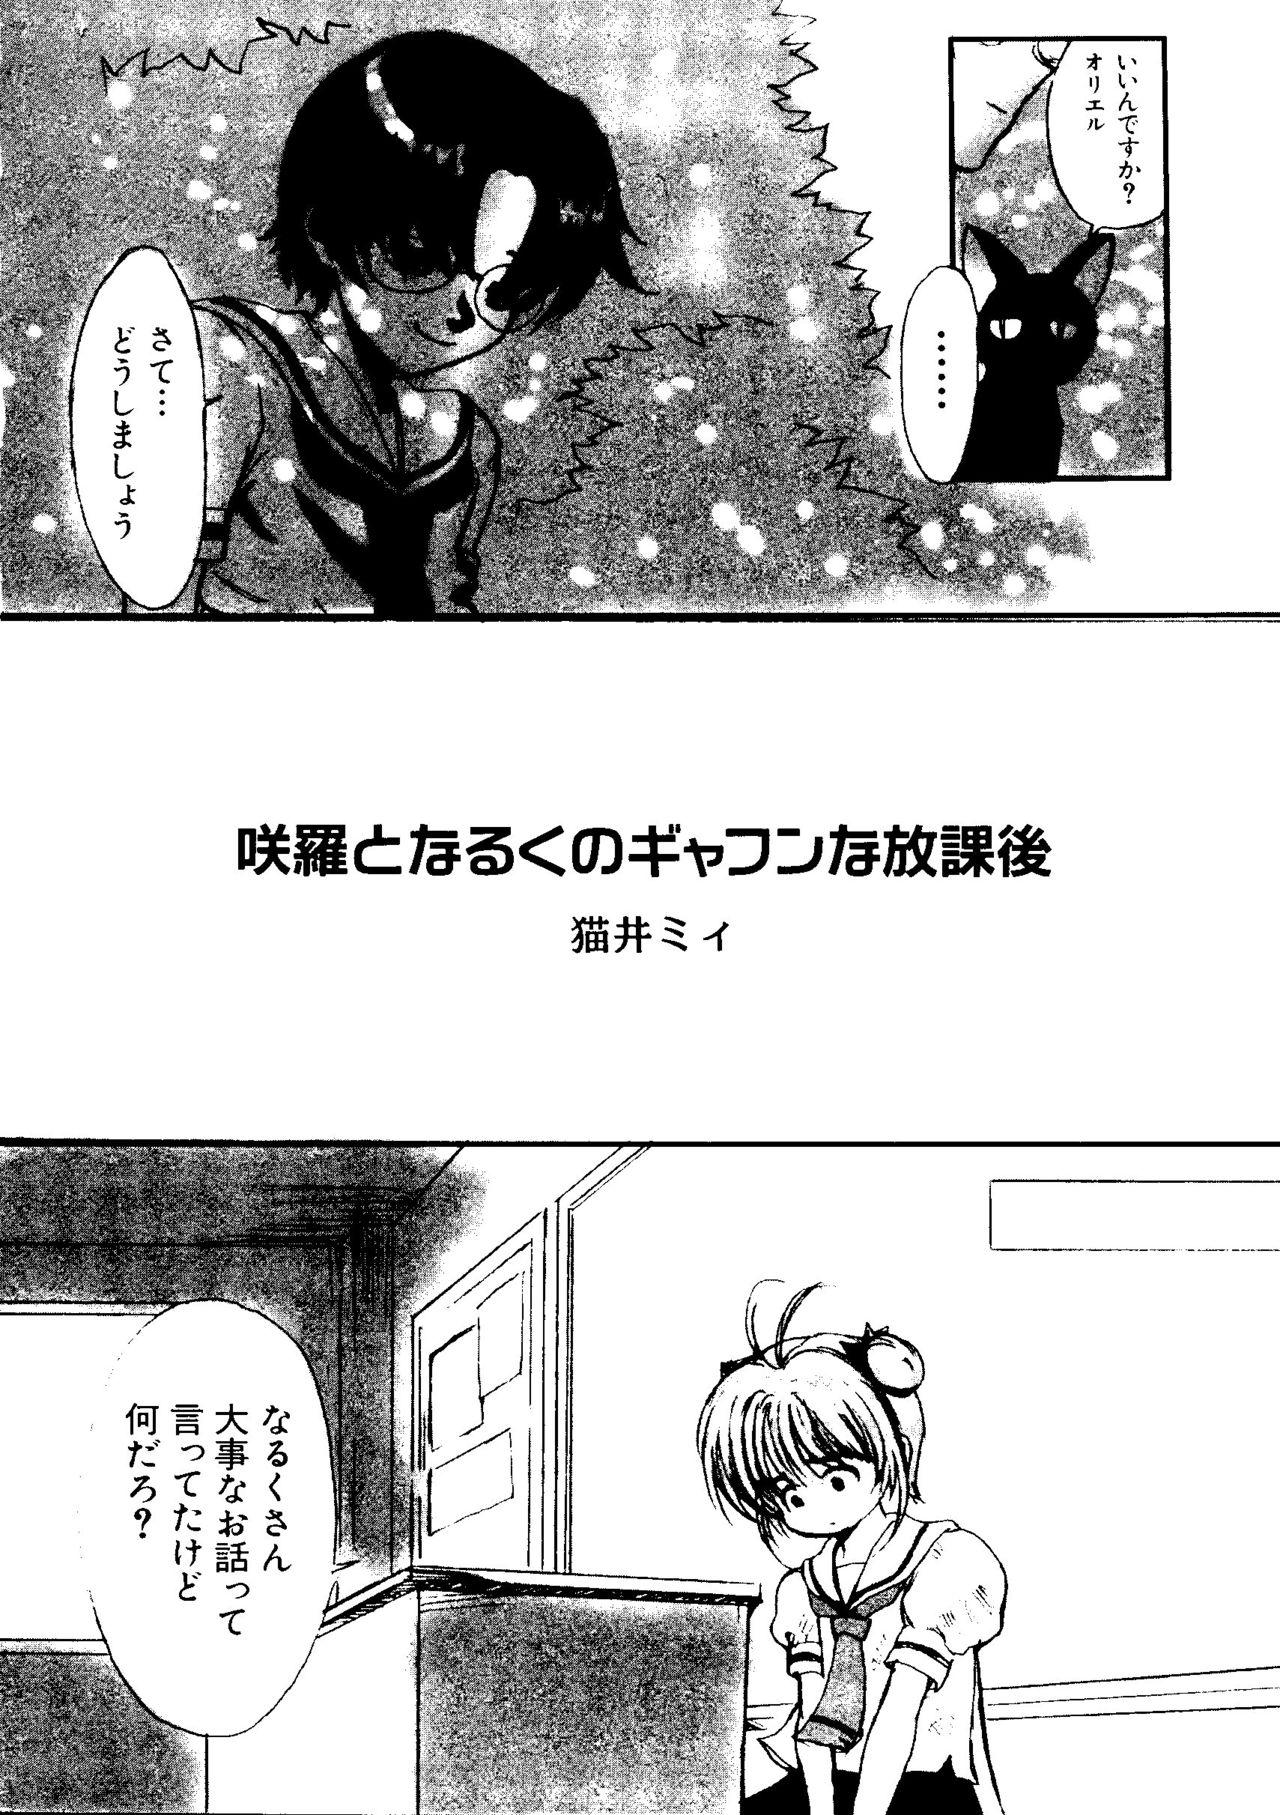 Curves Love Chara Taizen No. 5 - Cardcaptor sakura Ojamajo doremi Digimon adventure Ecoko Azuki-chan Massage Creep - Page 7